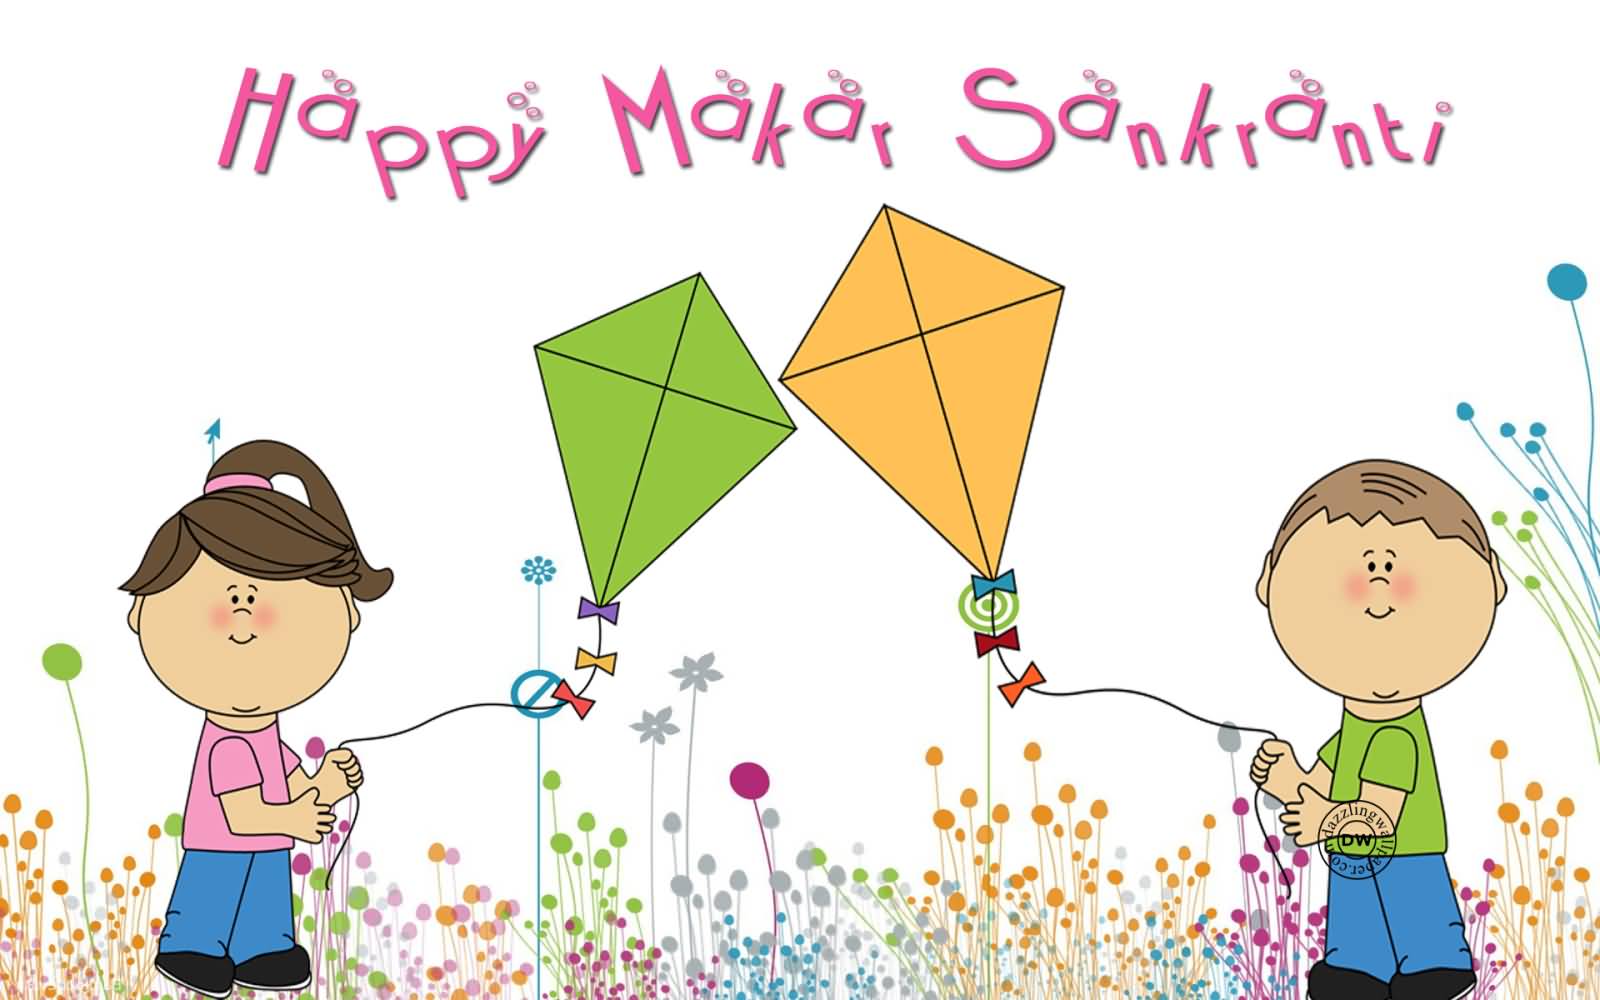 Happy Makar Sankranti Kids With Kites Cartoon Picture